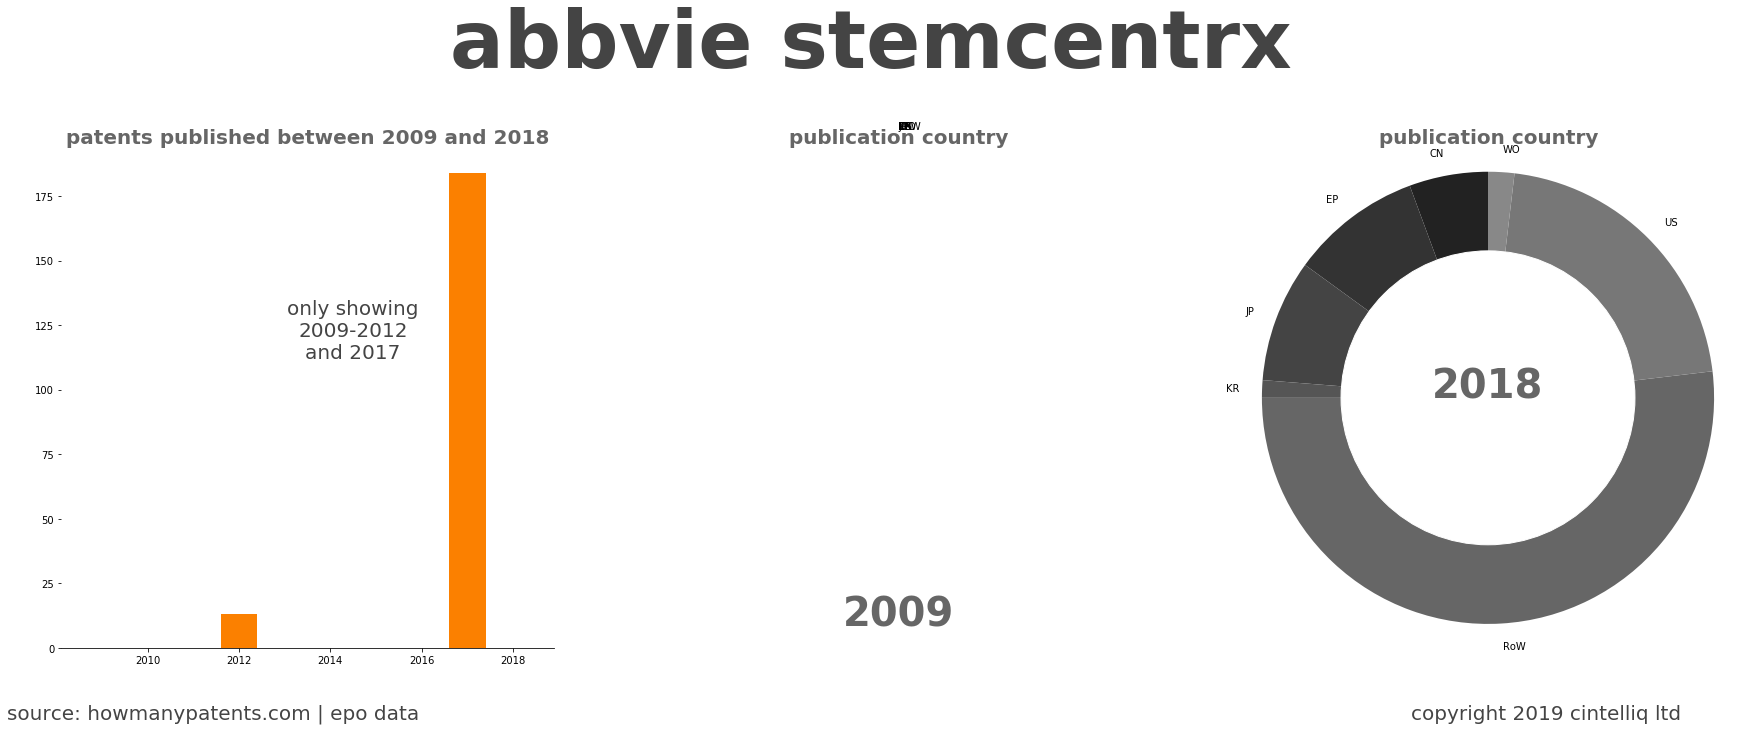 summary of patents for Abbvie Stemcentrx